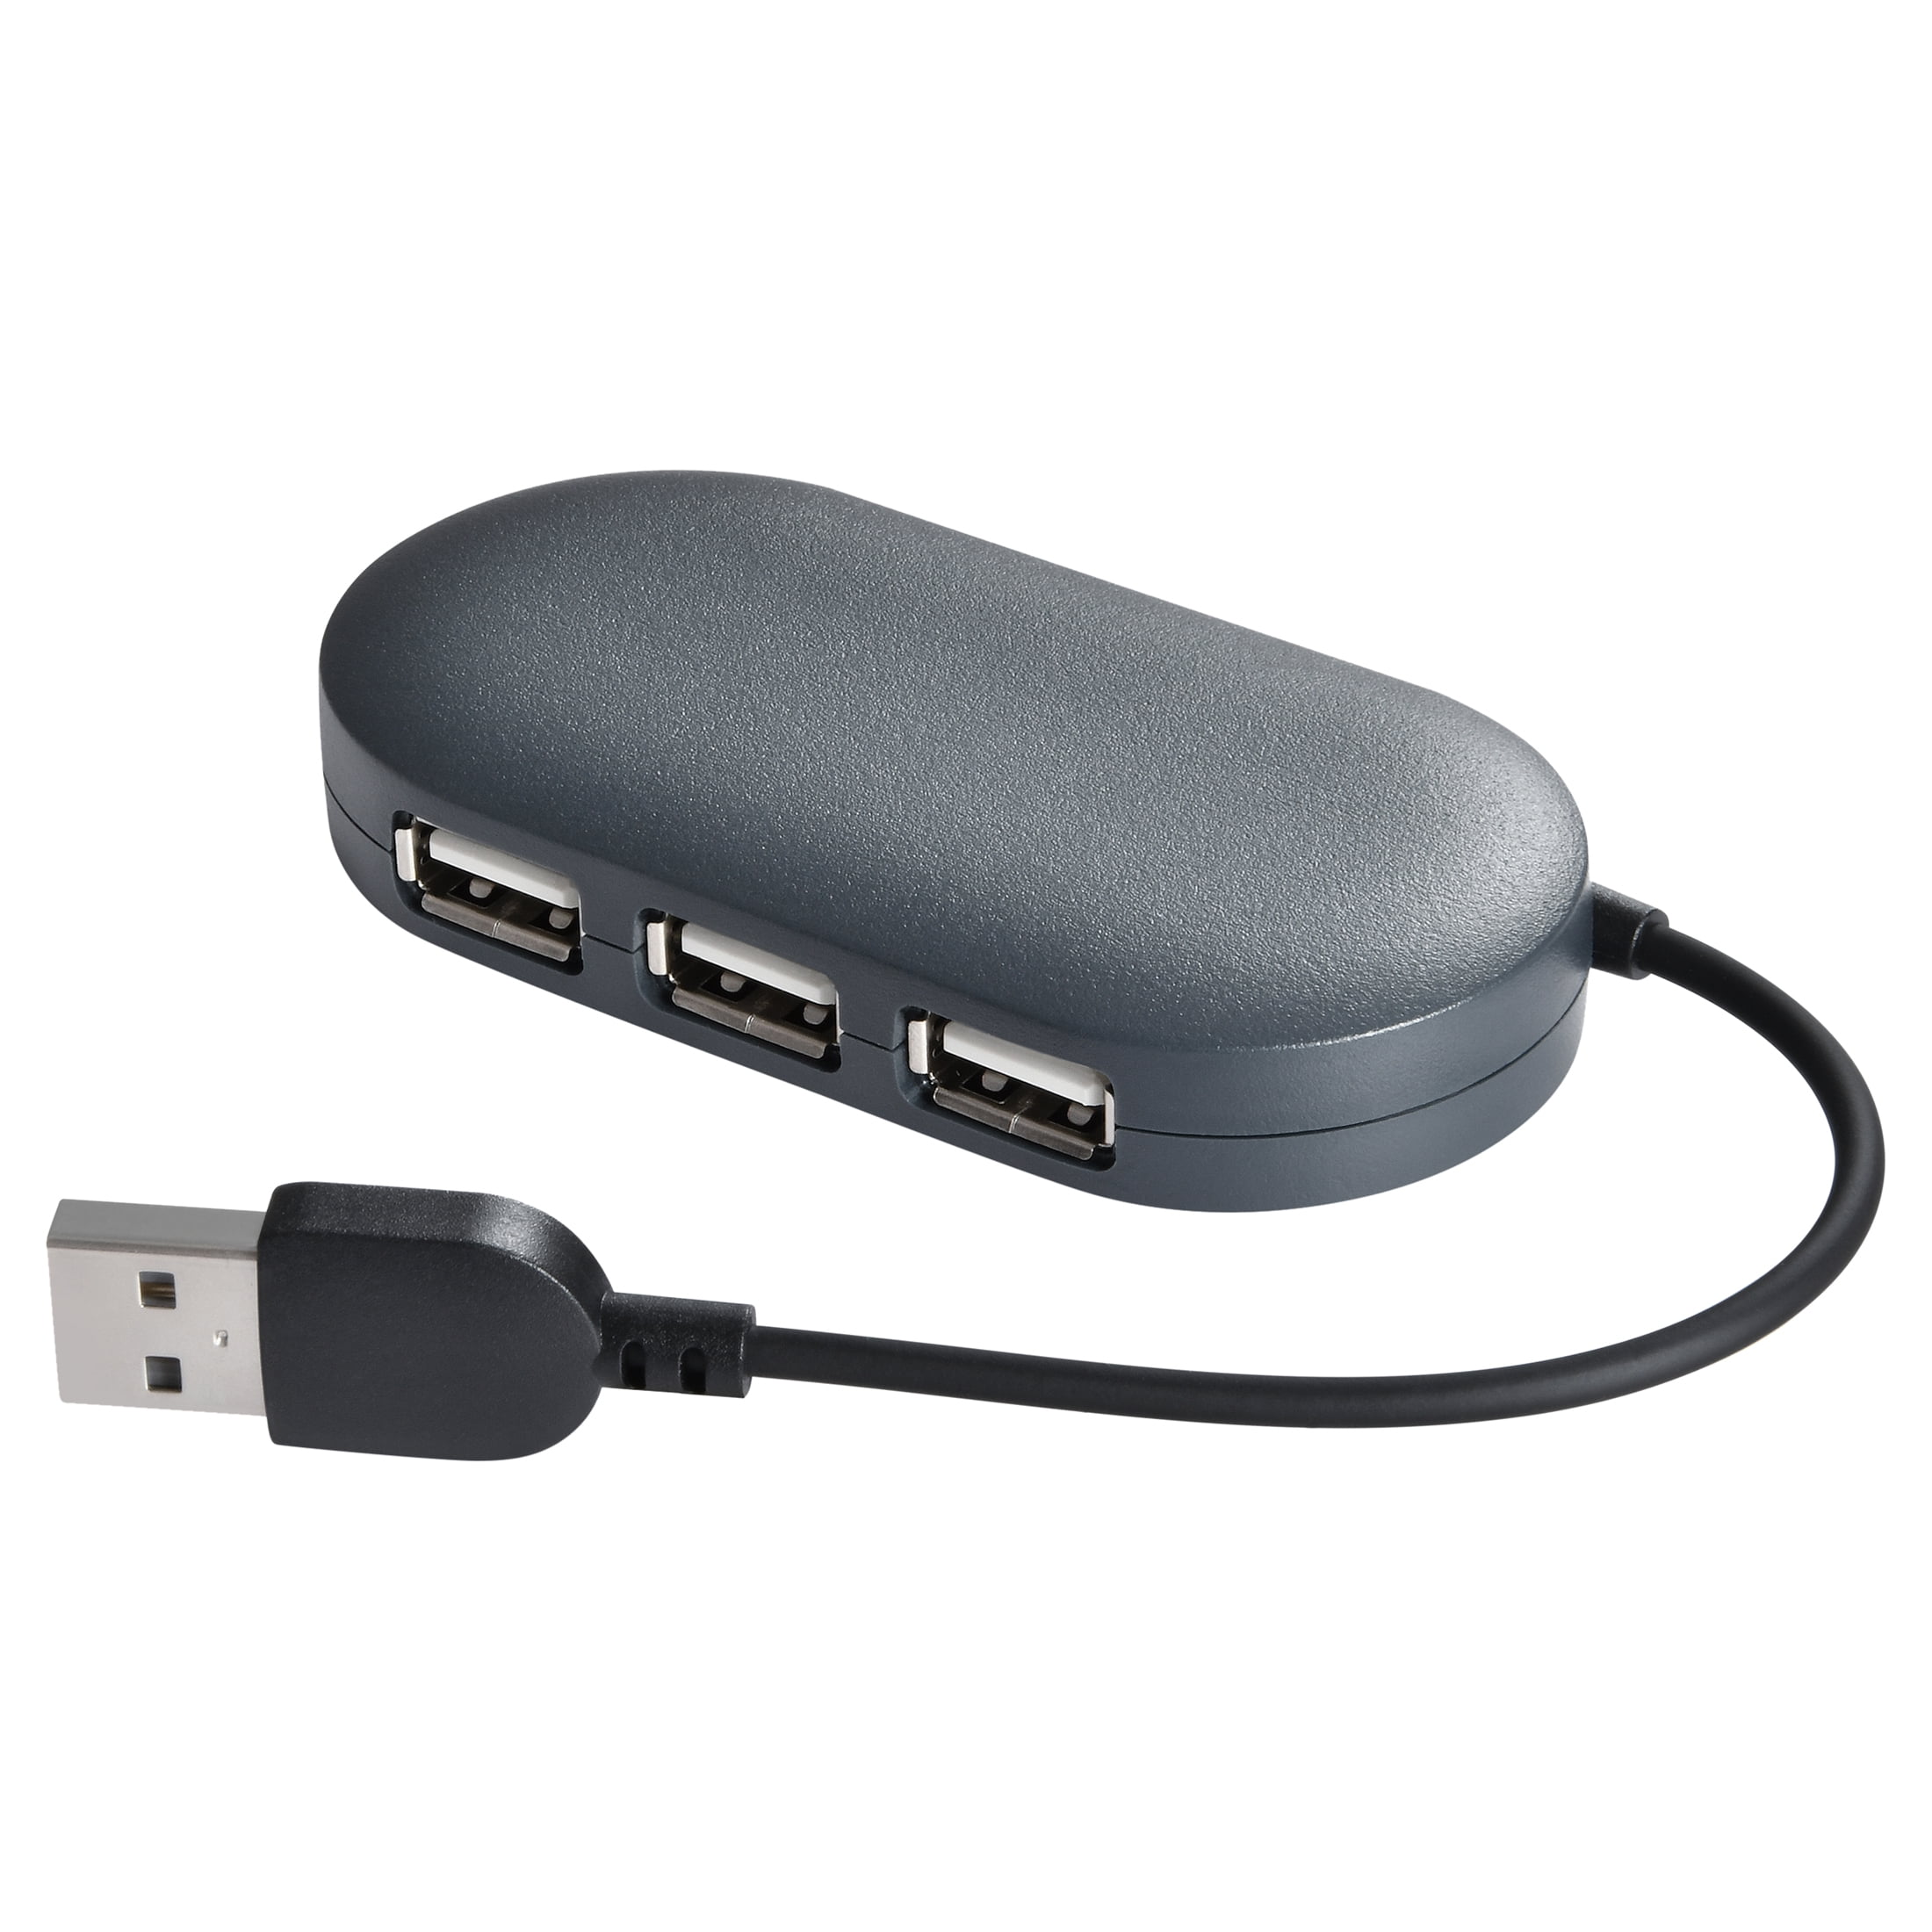 pinion chauffør barriere onn. Portable 4-Port USB Hub with USB 2.0 Ports - Walmart.com